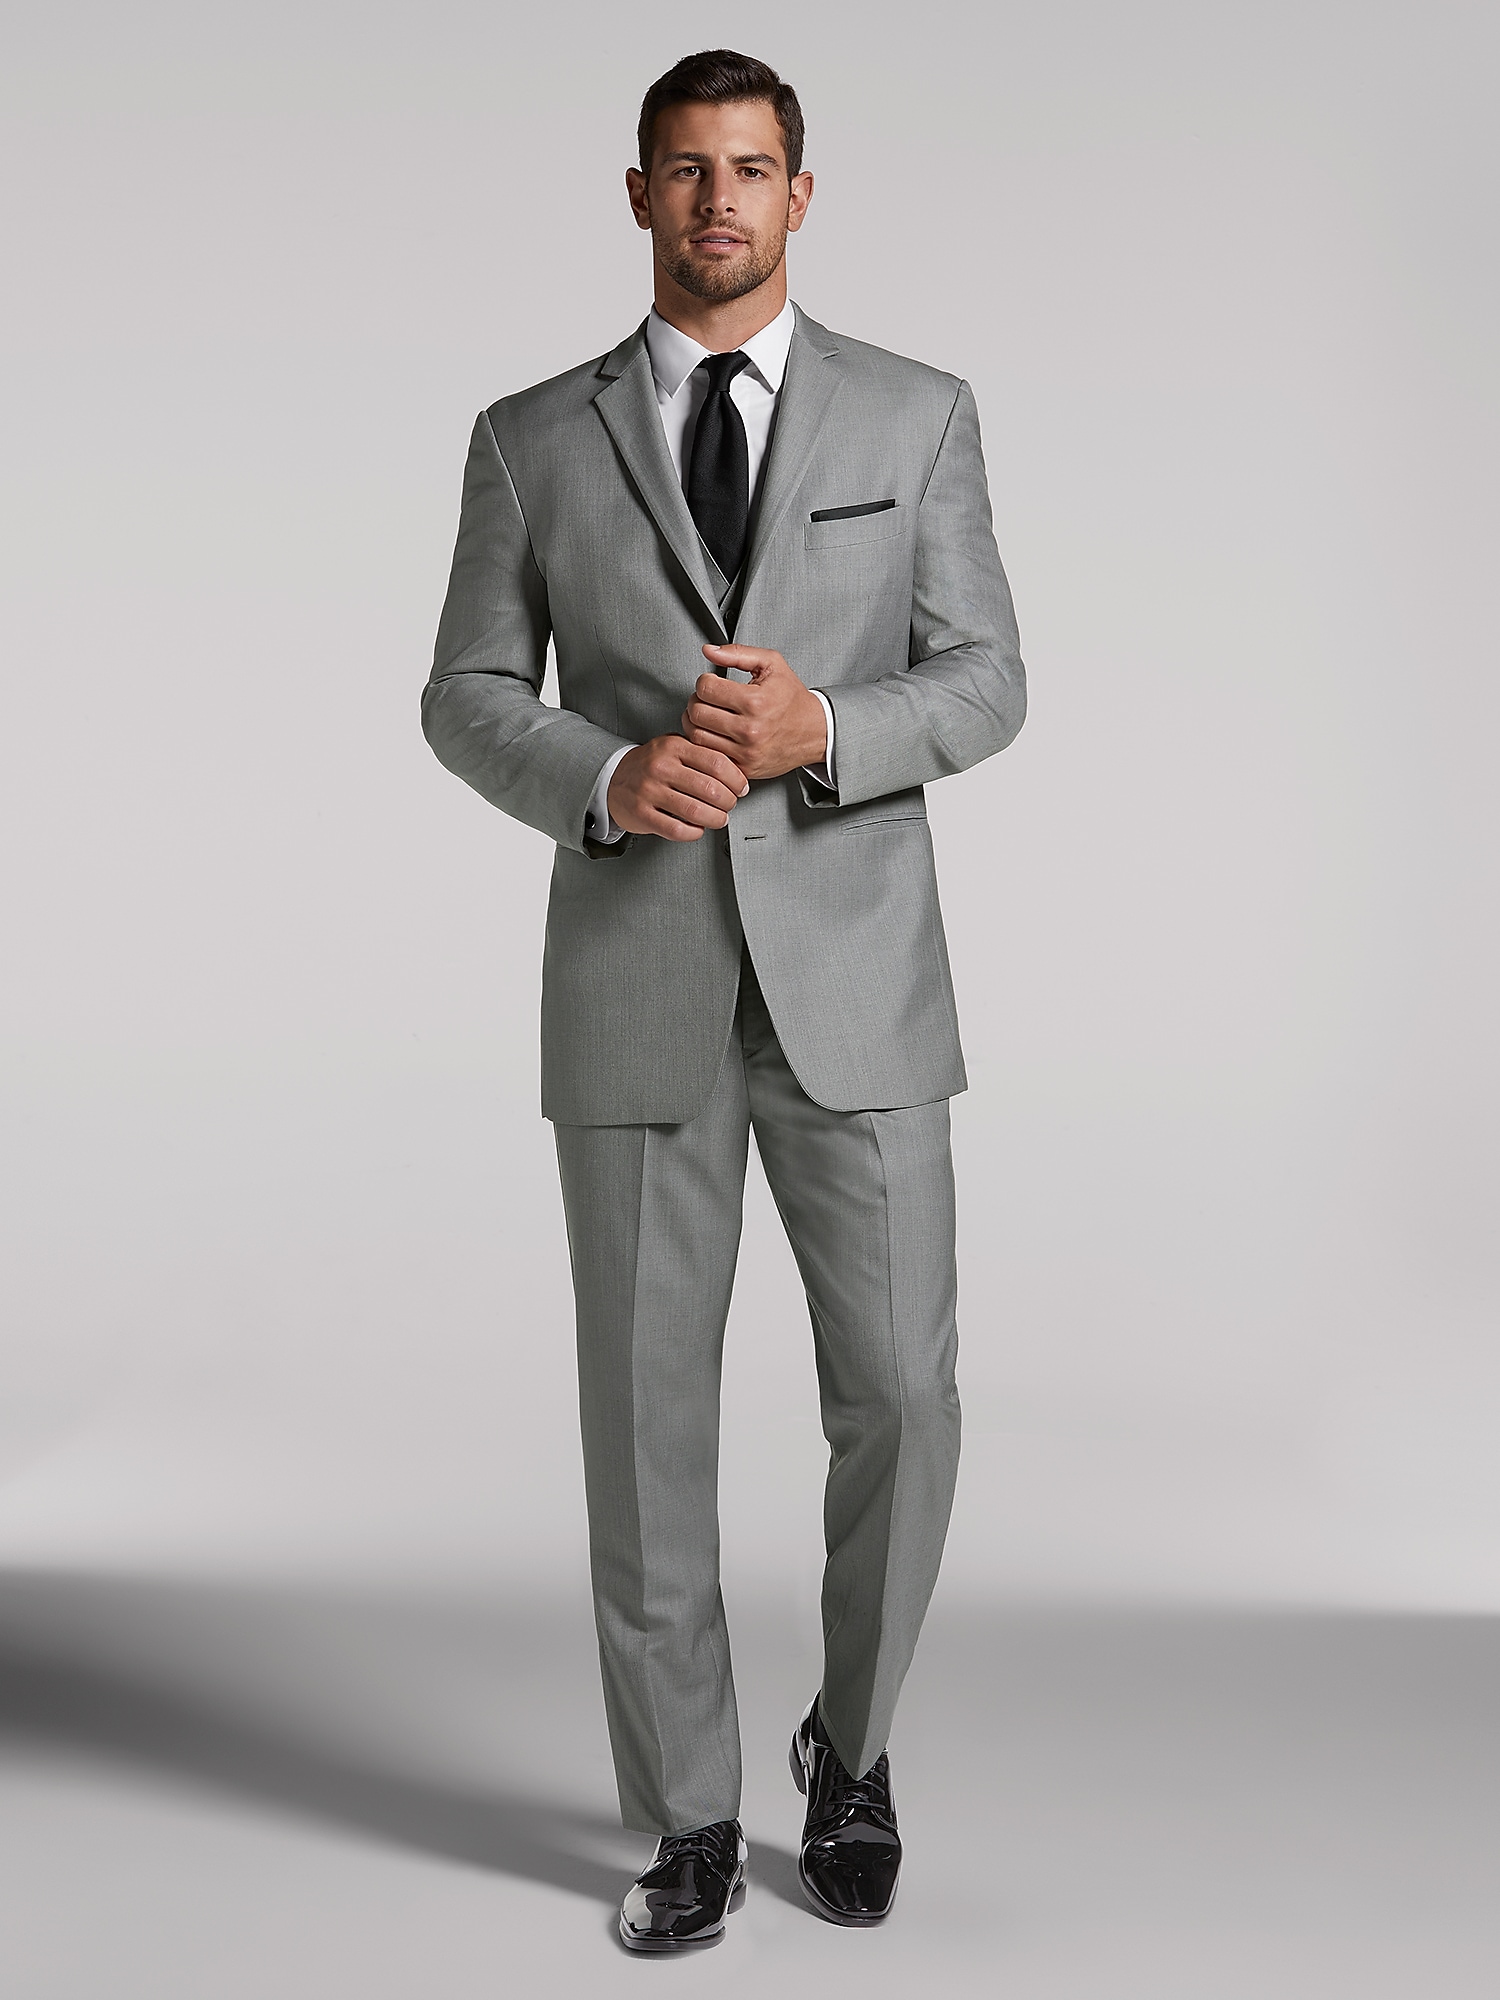 Vintage Men's Gray Suit By Pronto Uomo Suit Rental | lupon.gov.ph